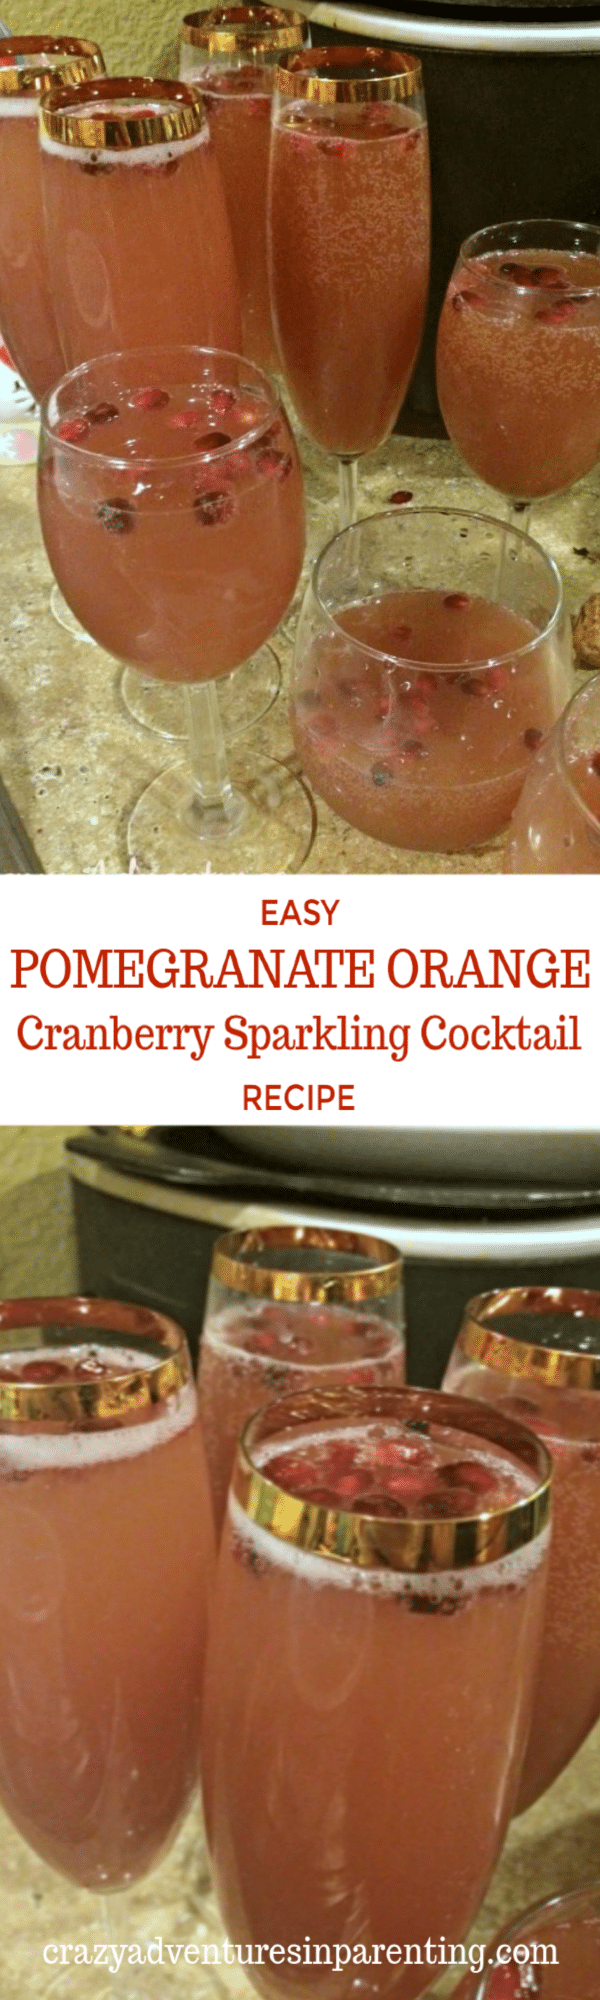 Pomegranate Orange Cranberry Sparkling Cocktail